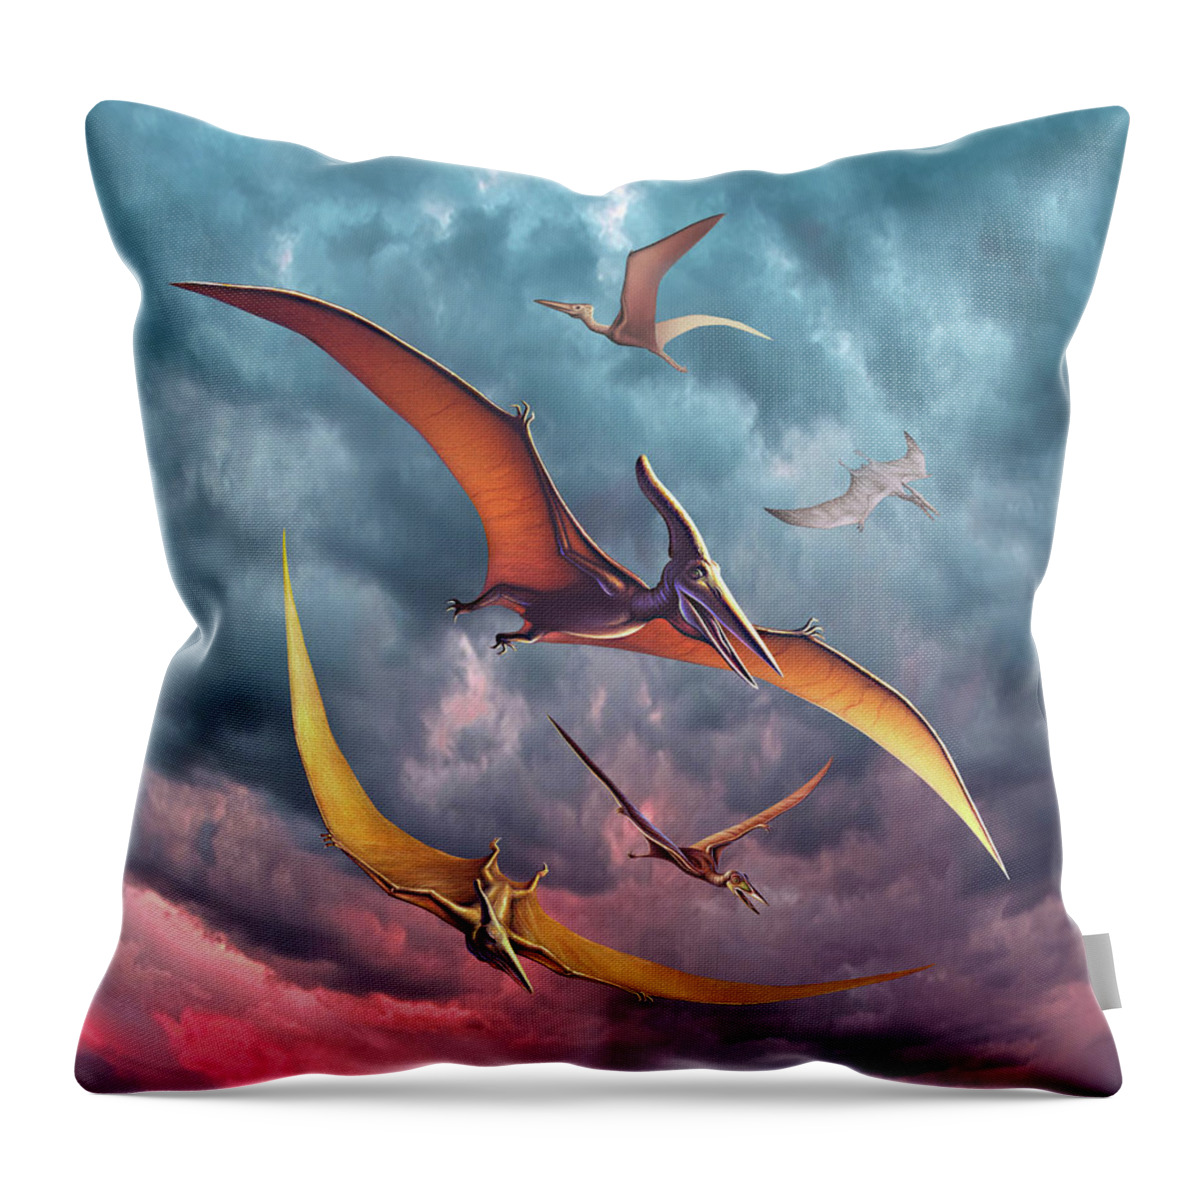 Pterosaur Throw Pillow featuring the digital art Pterosaur Squadron by Jerry LoFaro